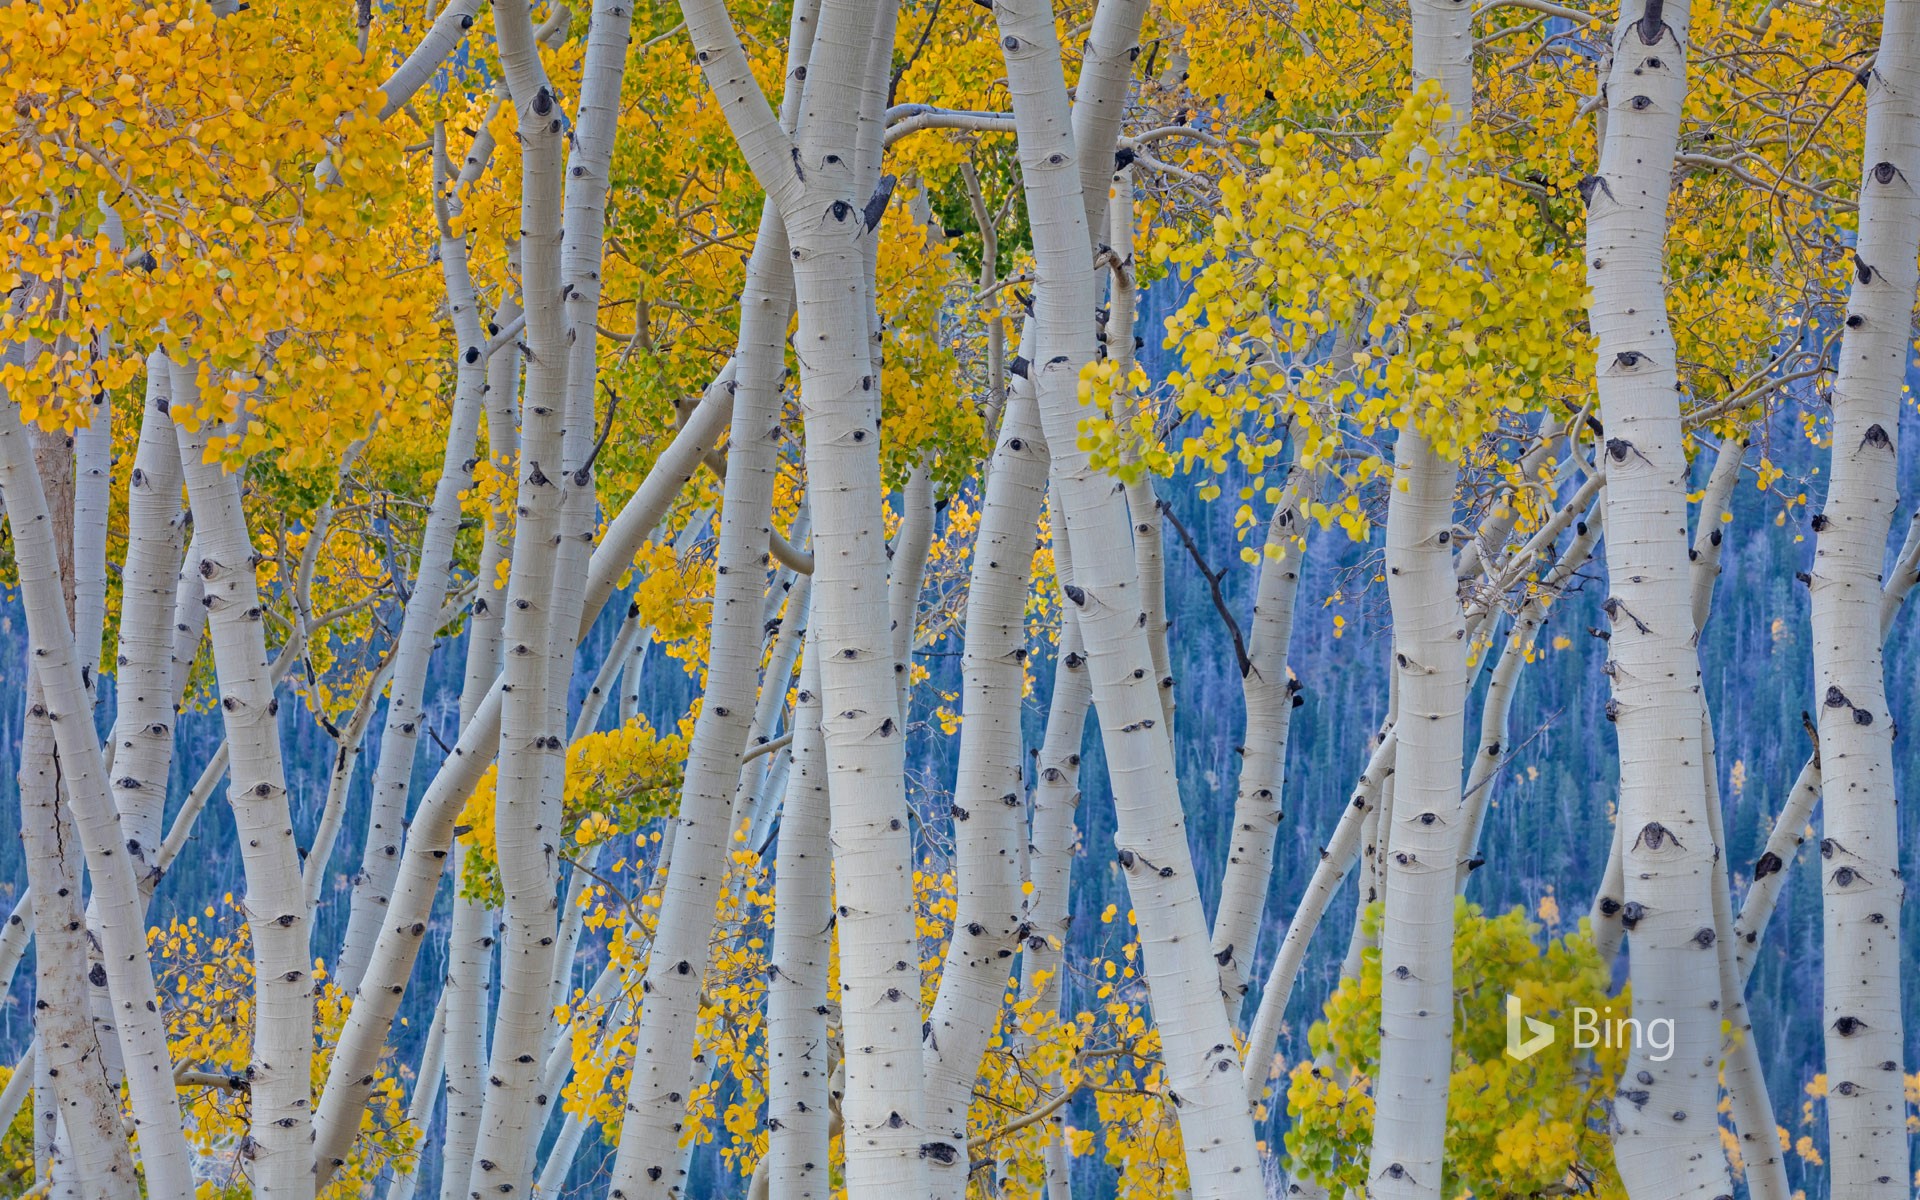 Pando, a quaking aspen grove in Fishlake National Forest, Utah